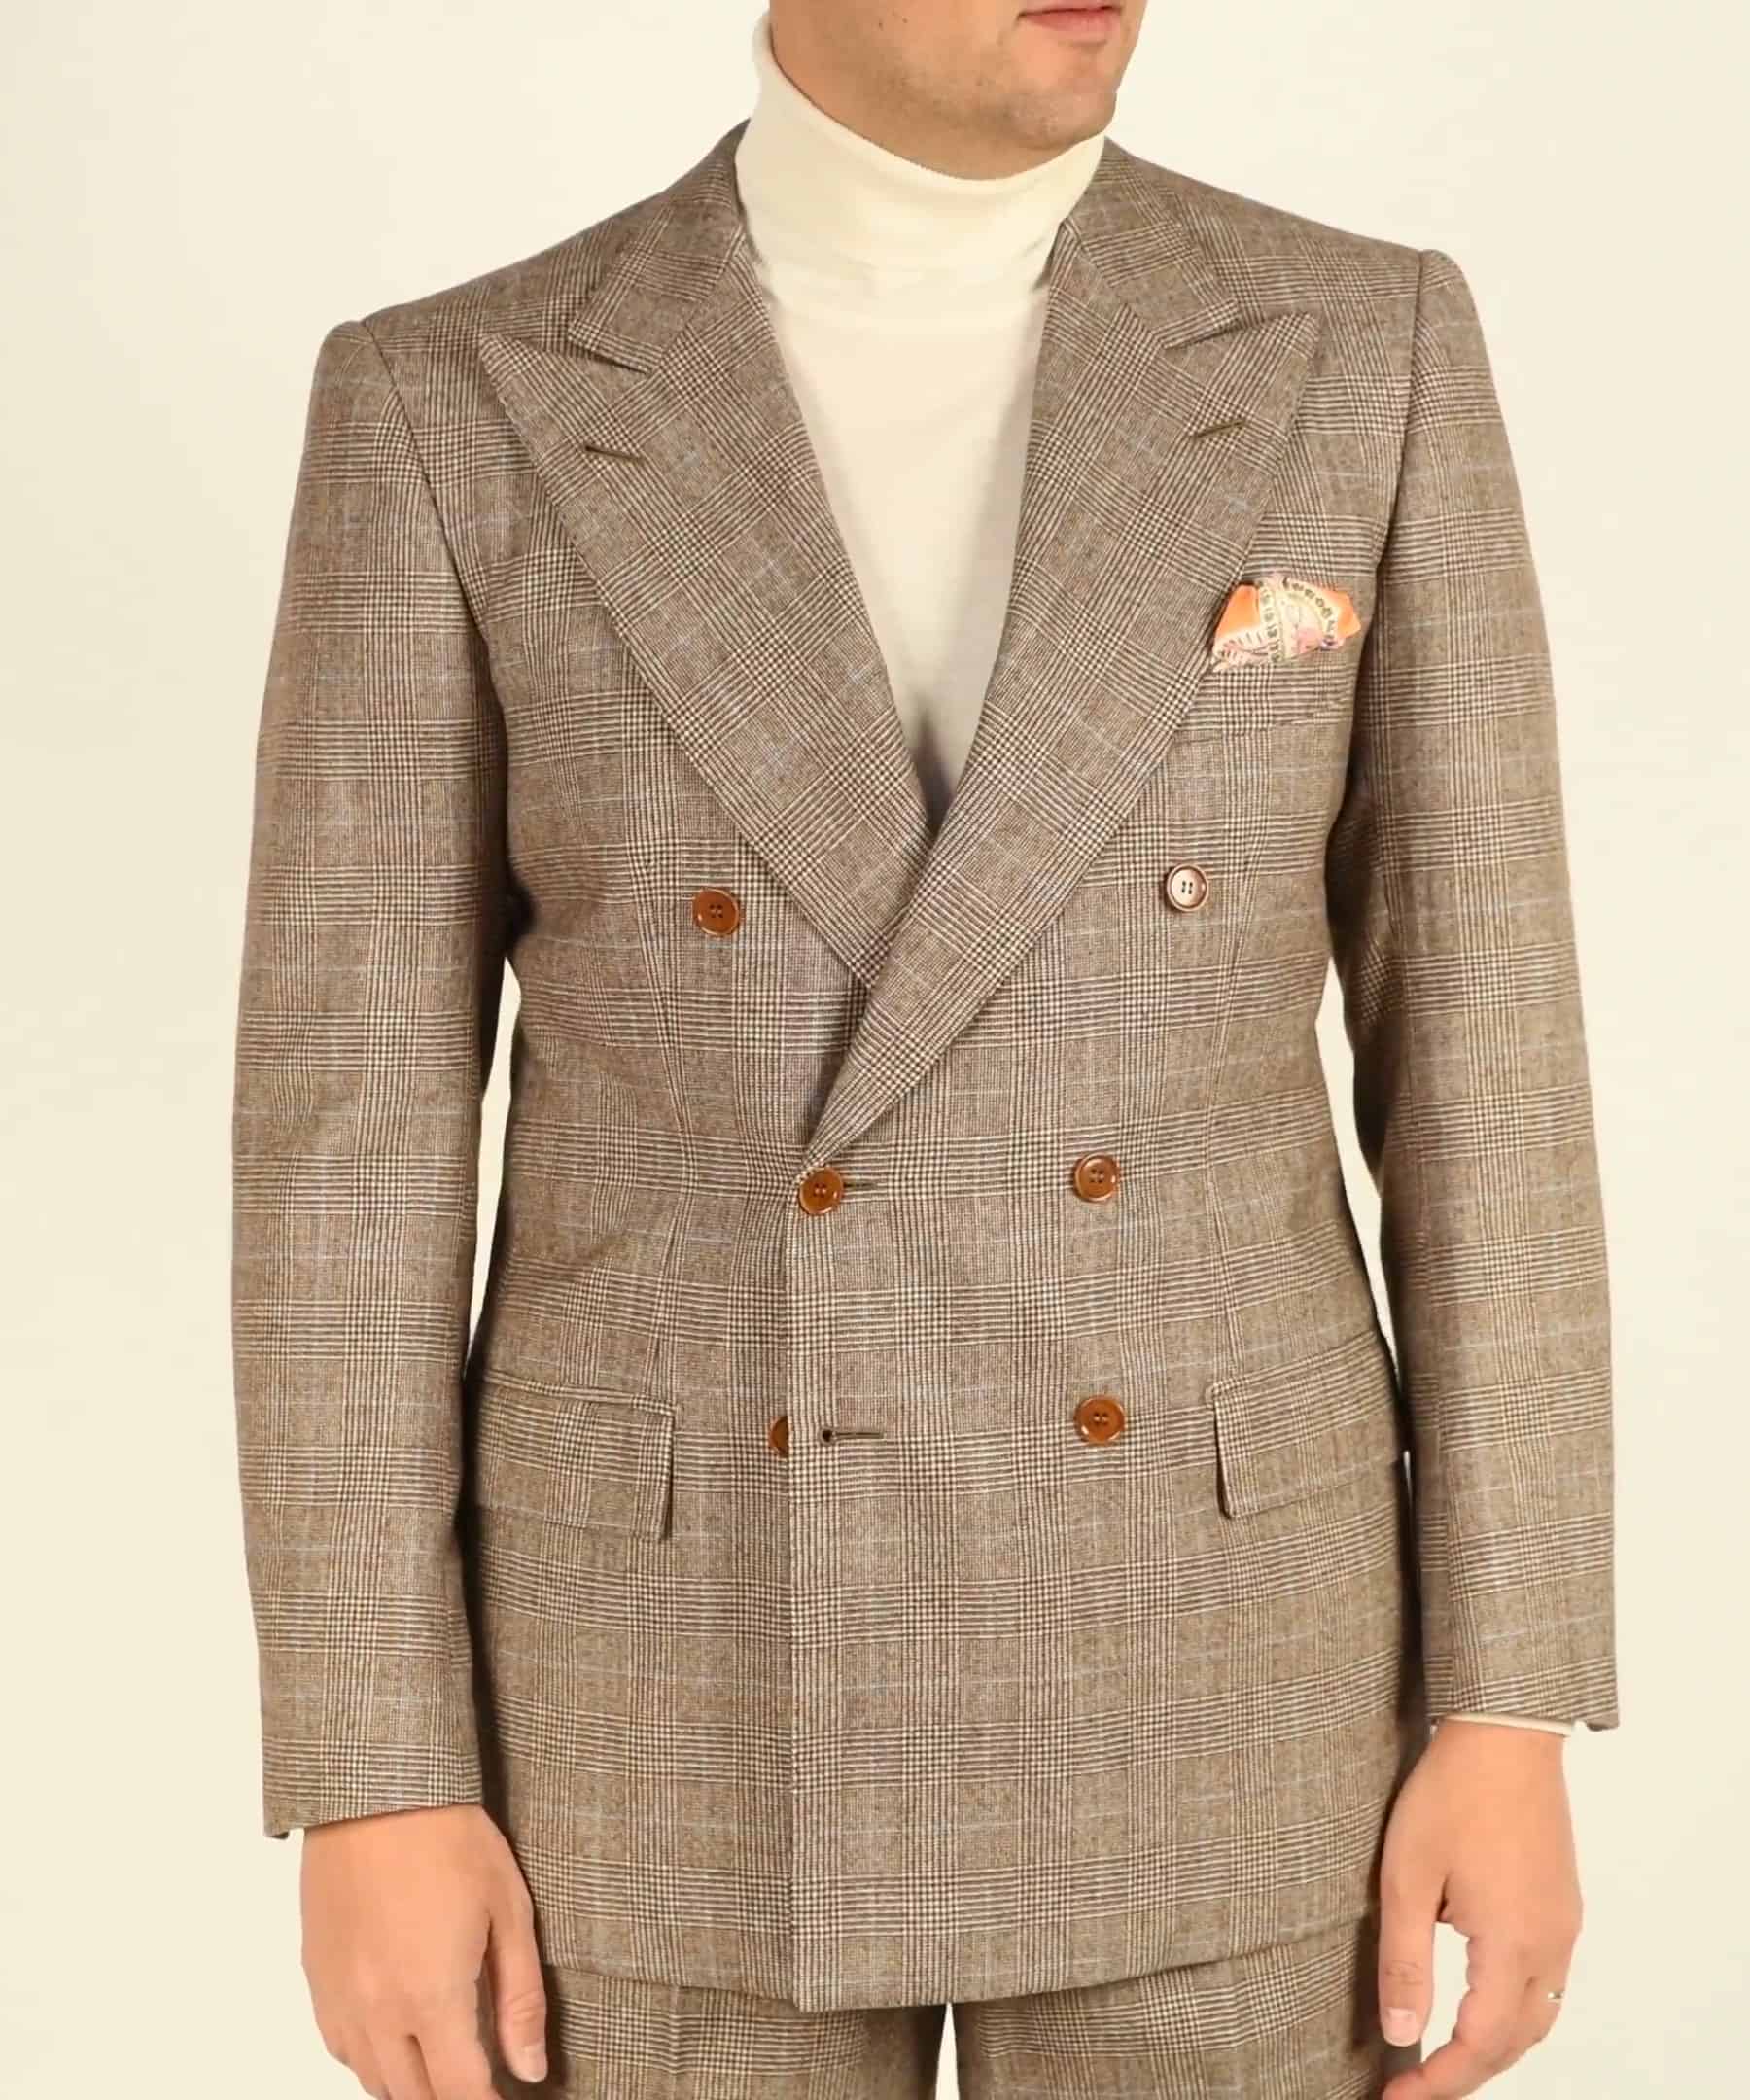 An ivory merino wool turtleneck worn under a brown check suit